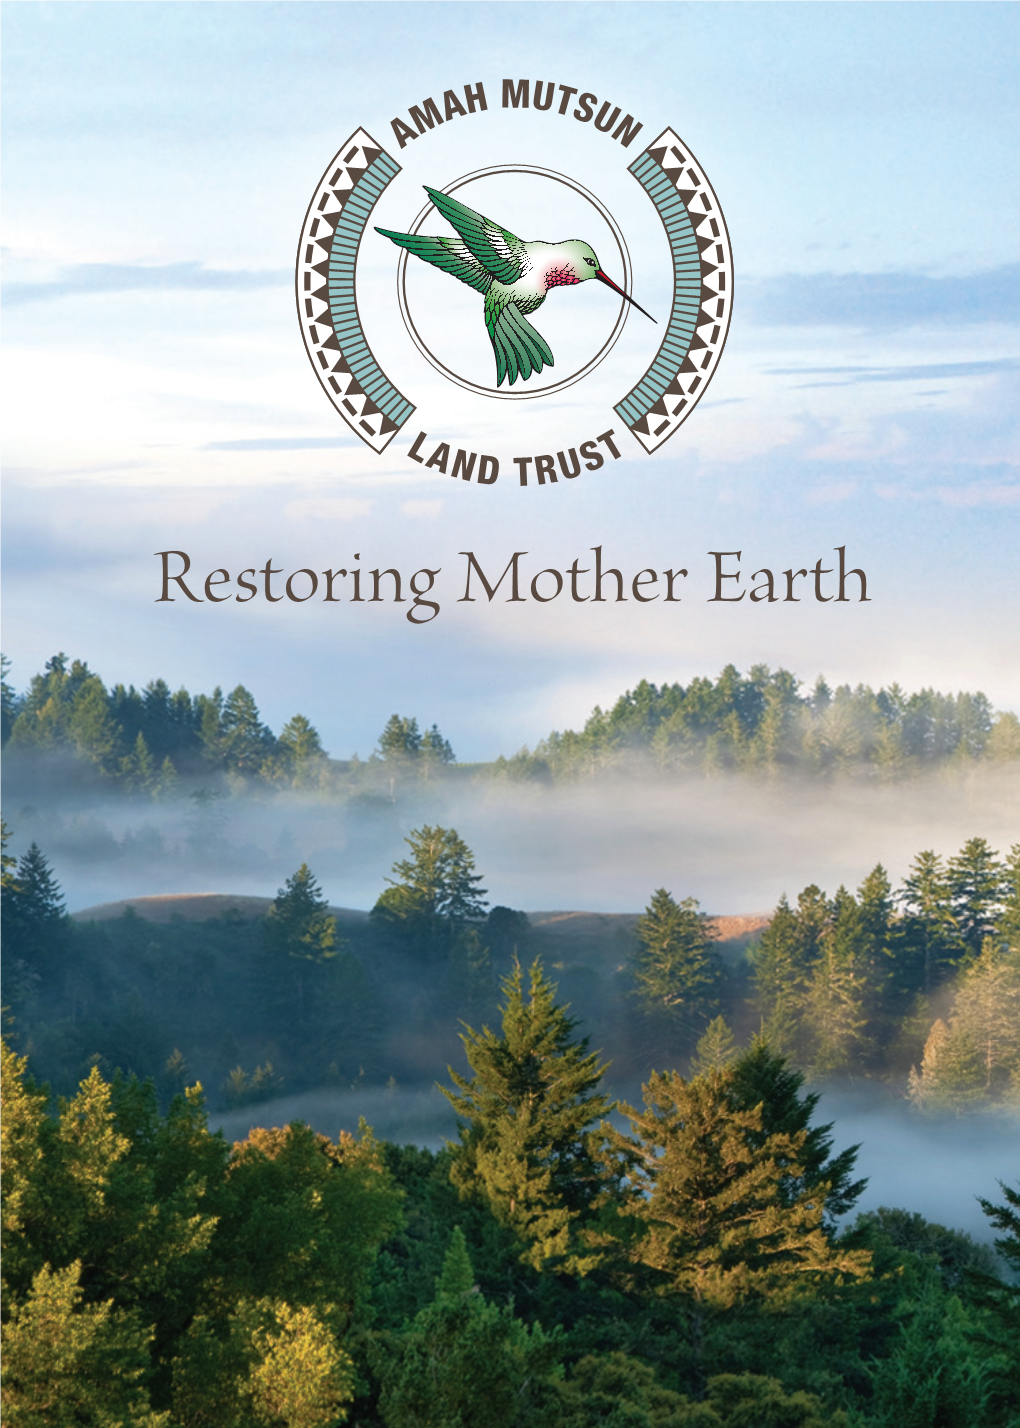 Restoring Mother Earth WE ARE AMAH MUTSUN